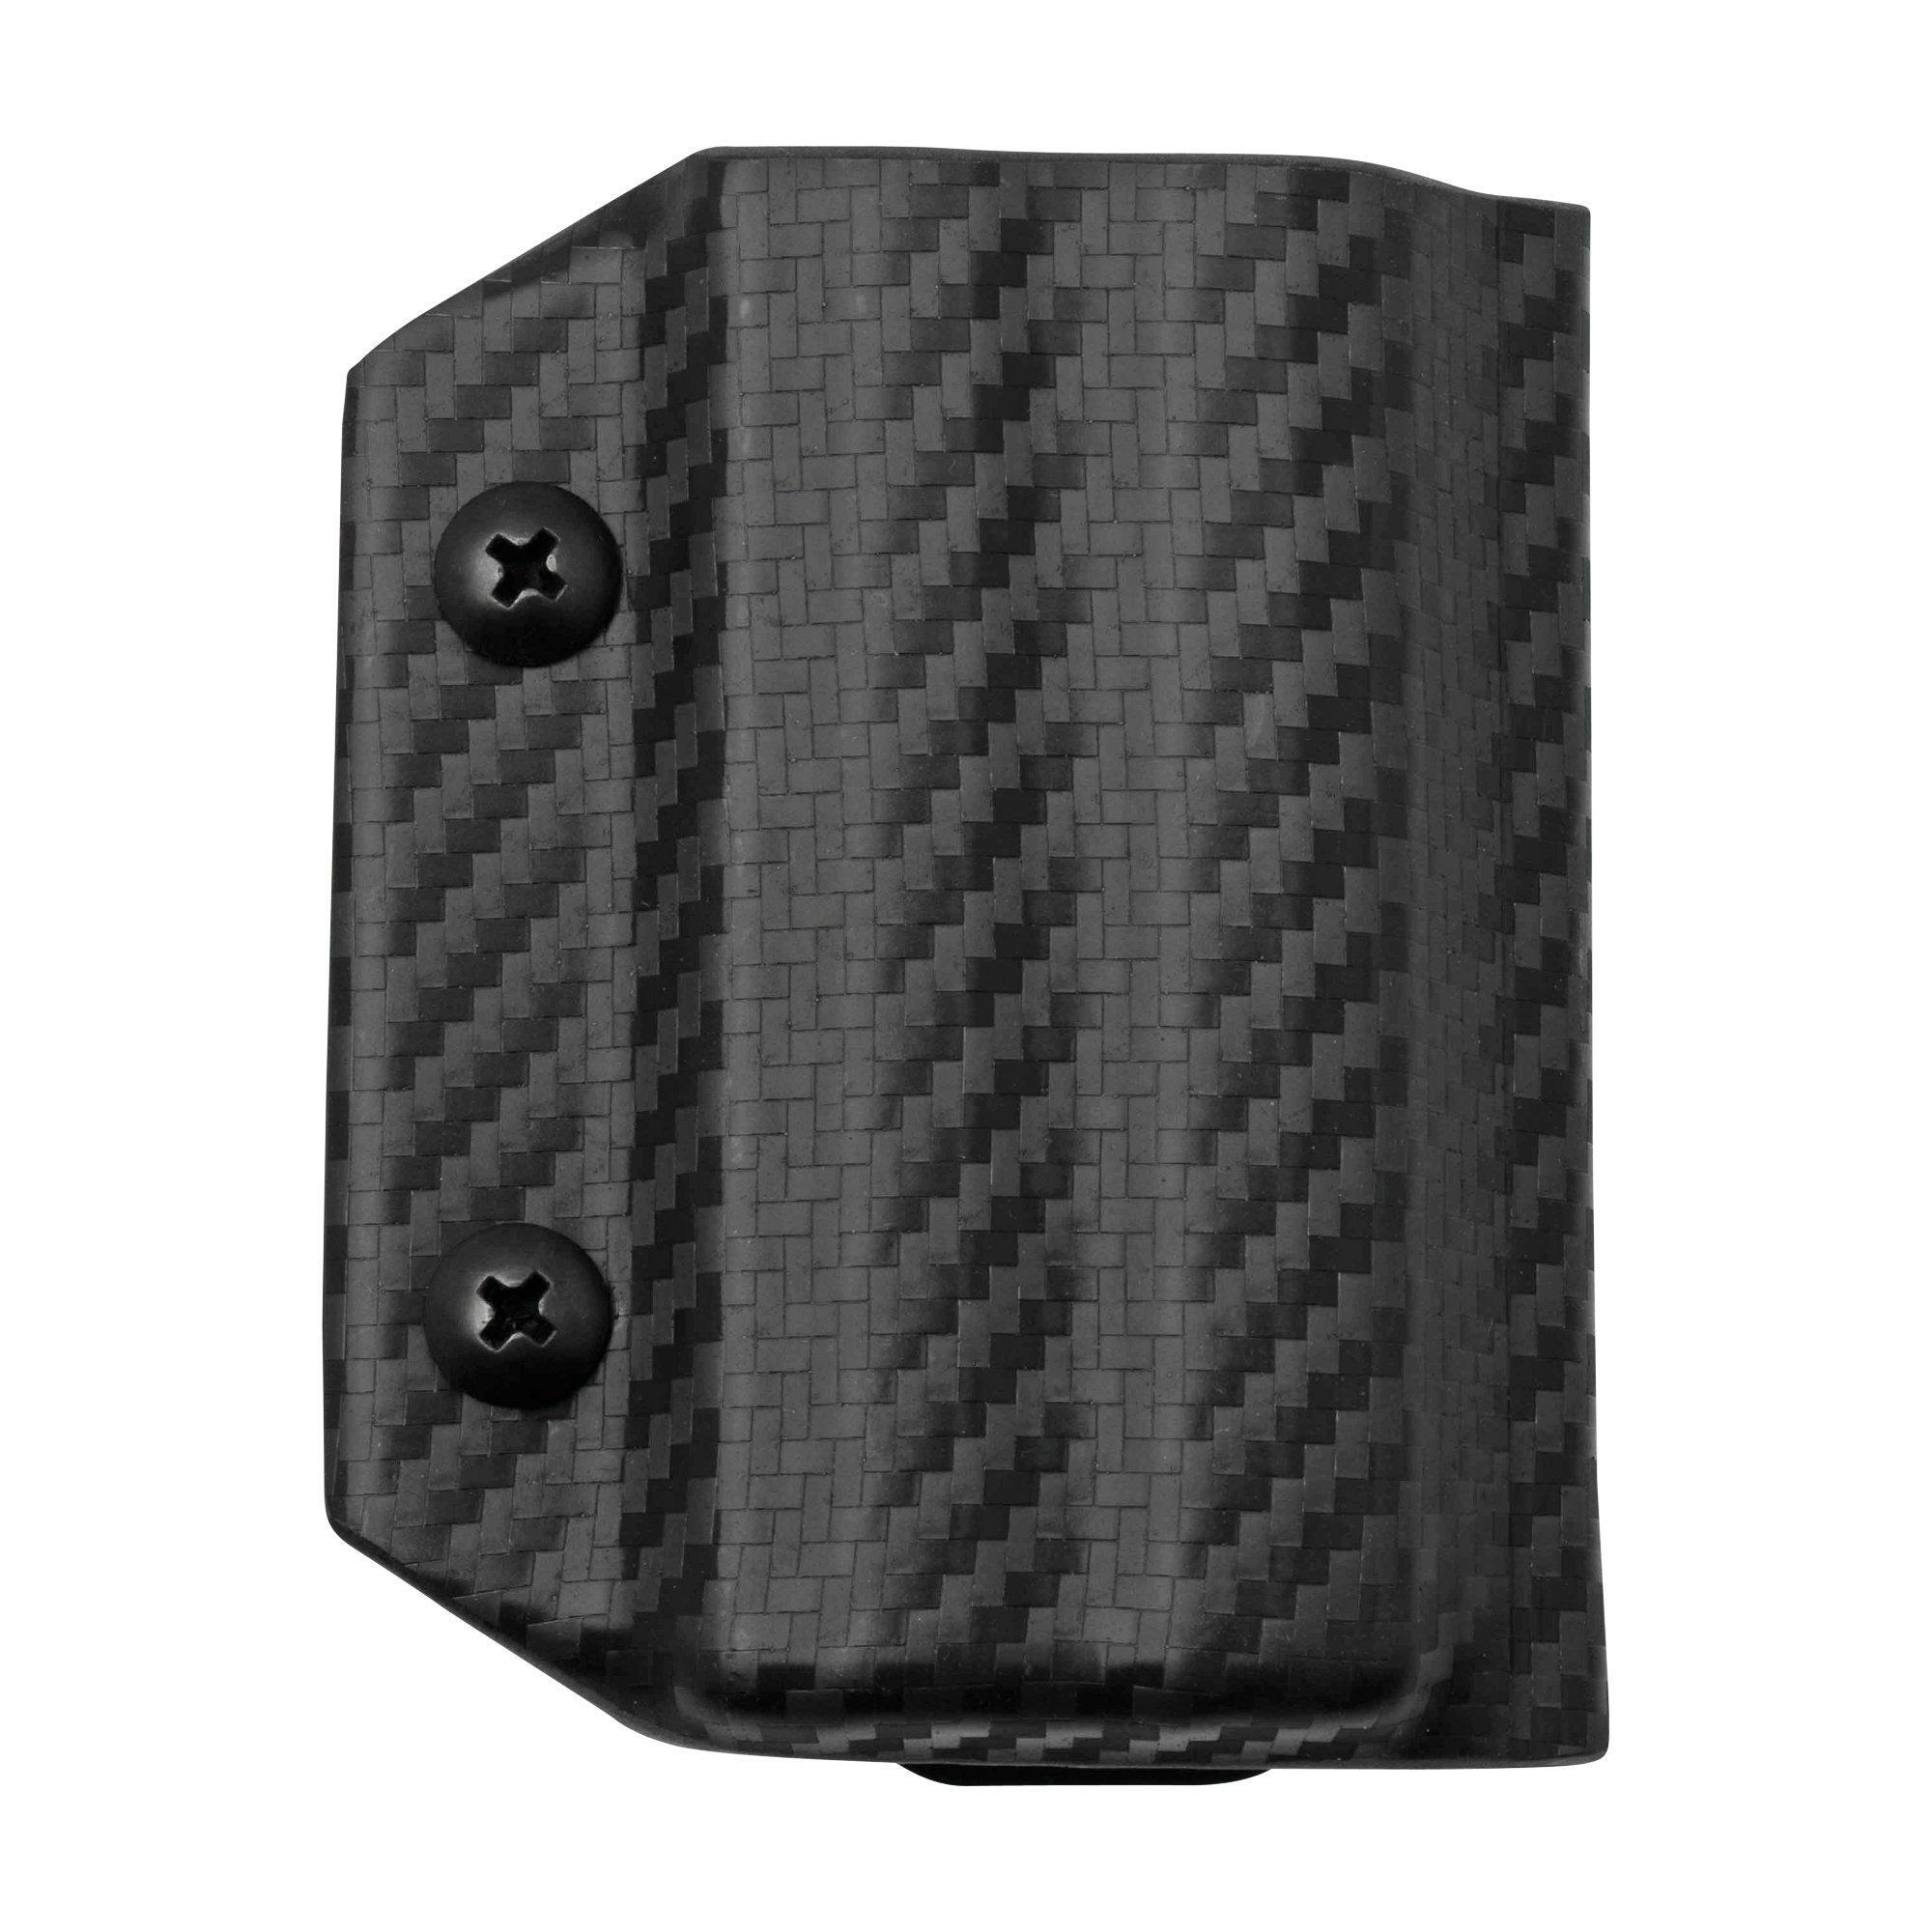 Clip & Carry Clip And Carry Kydex Sheath SOG Powerlock, Carbon Fiber Black SPWRLK-CF-BLK riemholster